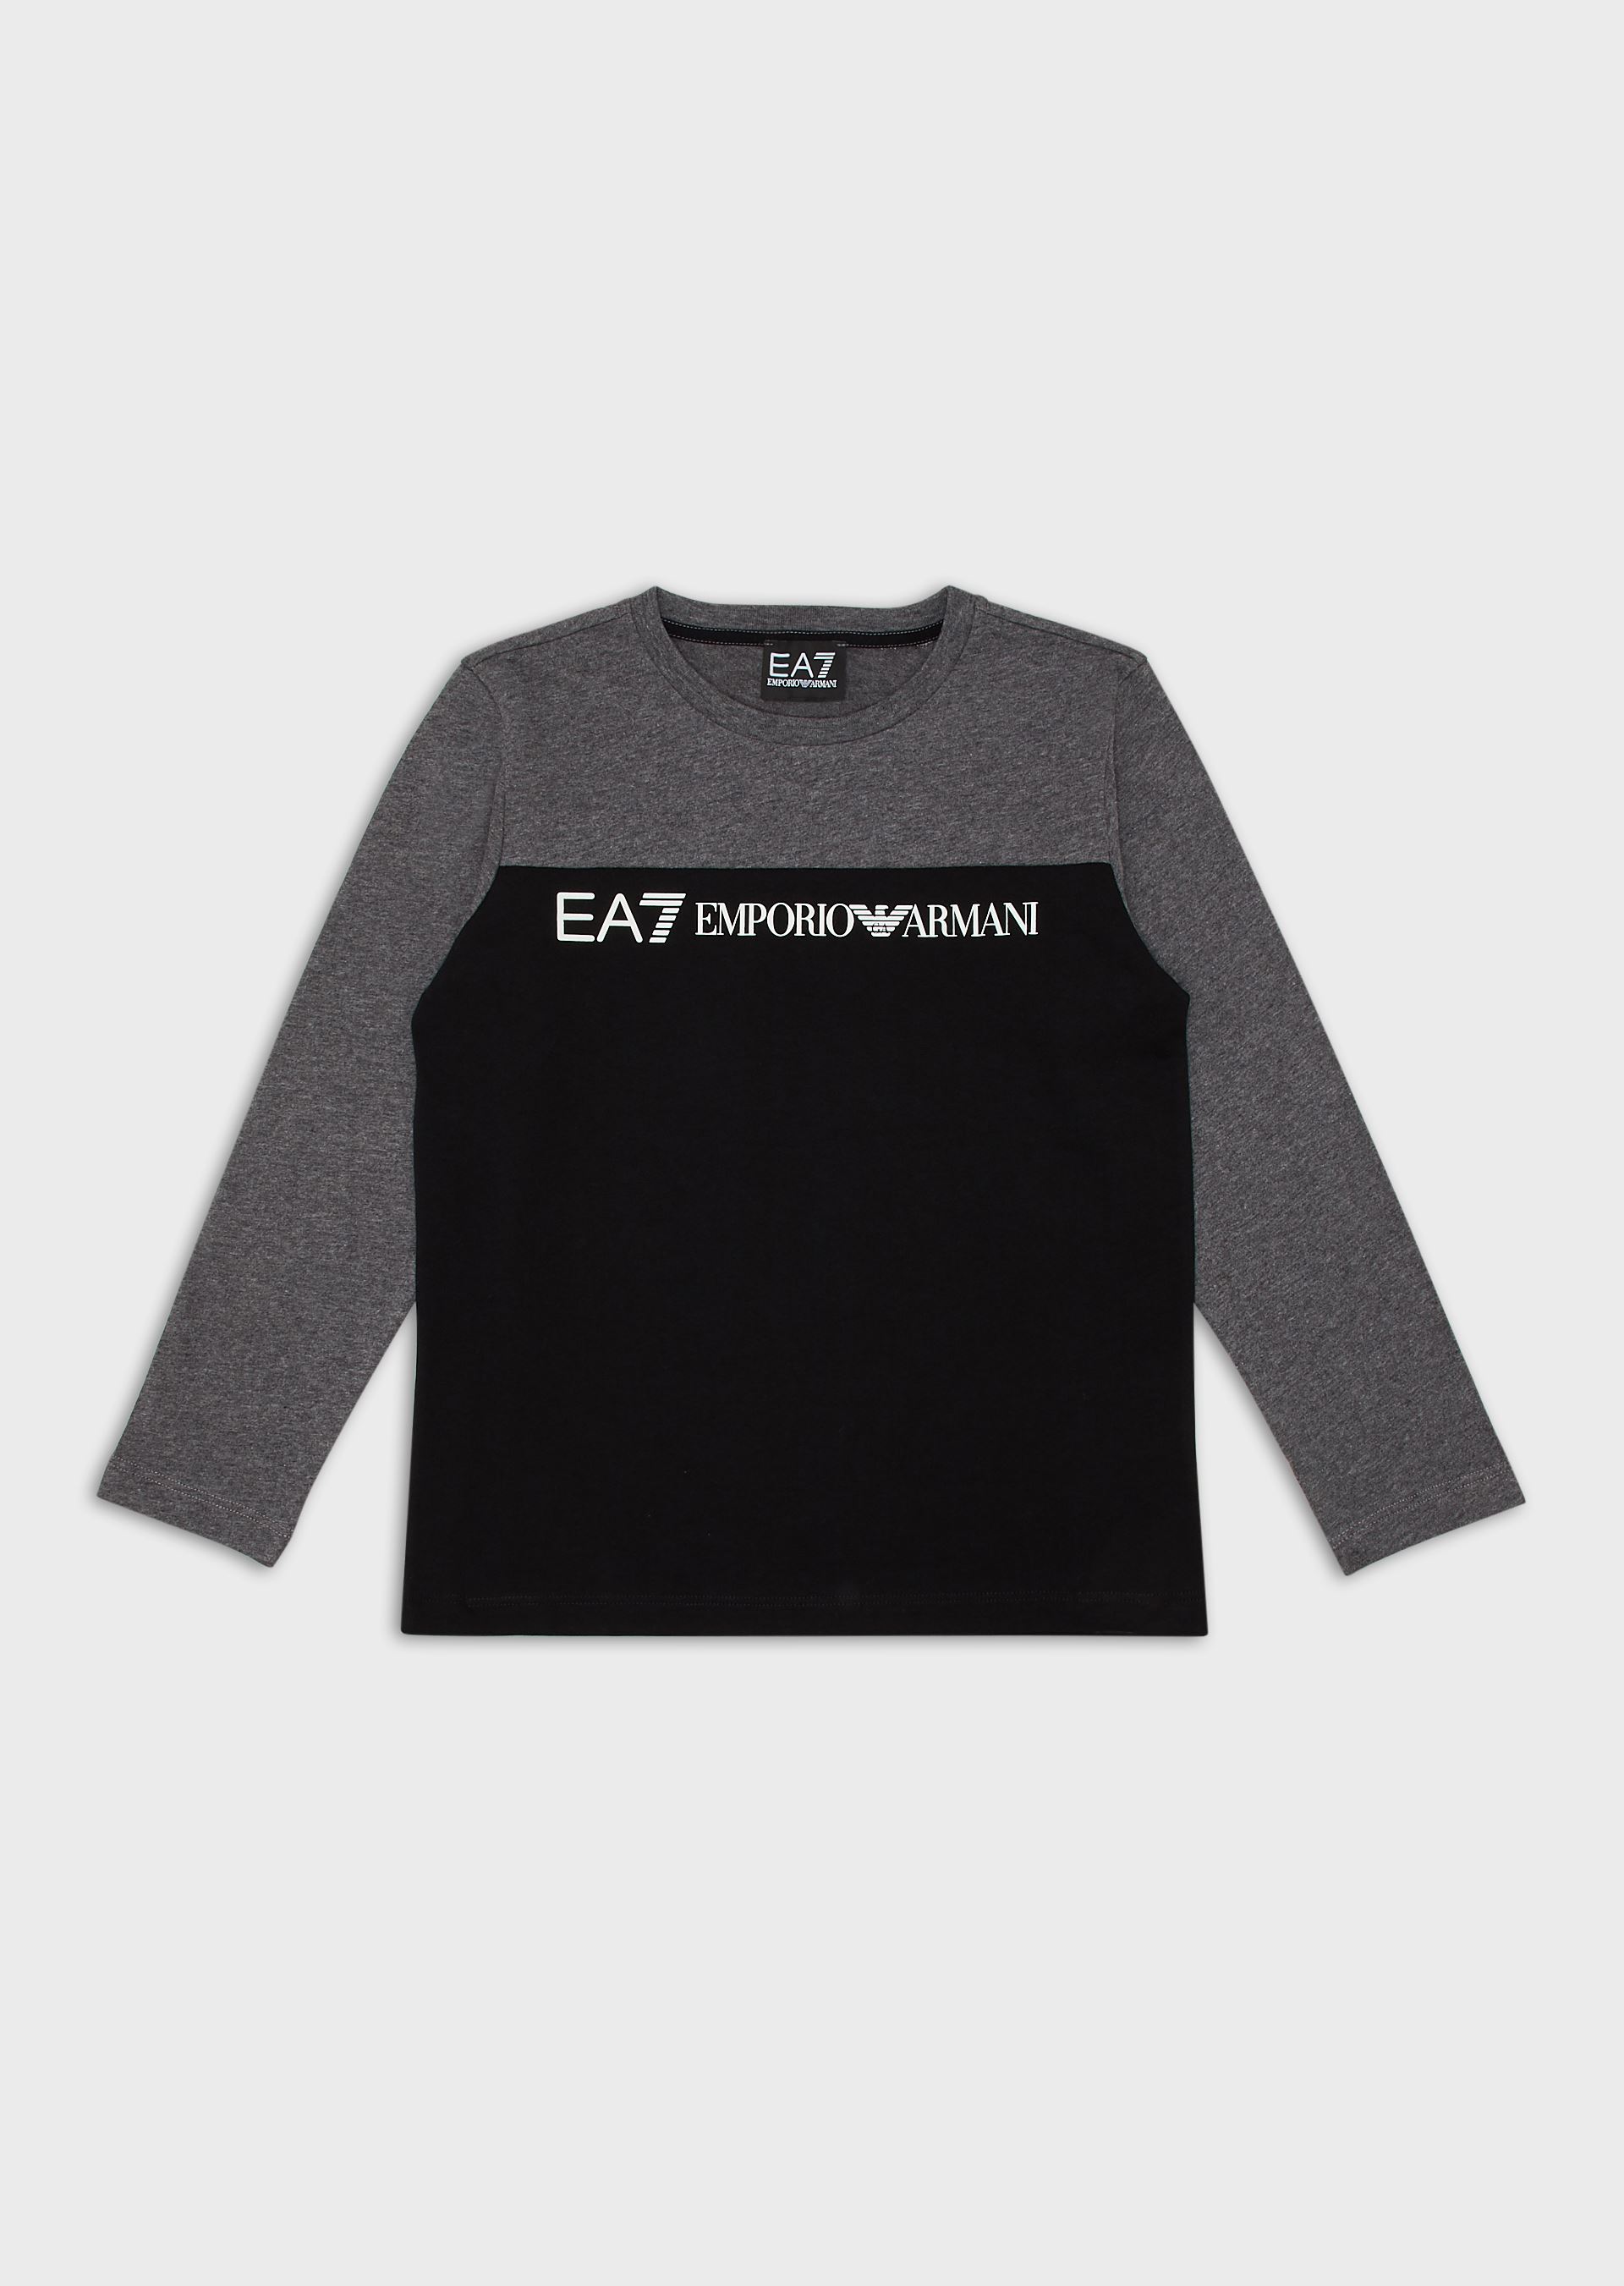 Emporio Armani Long-sleeved T-shirts - Item 12495241 In Dark Gray